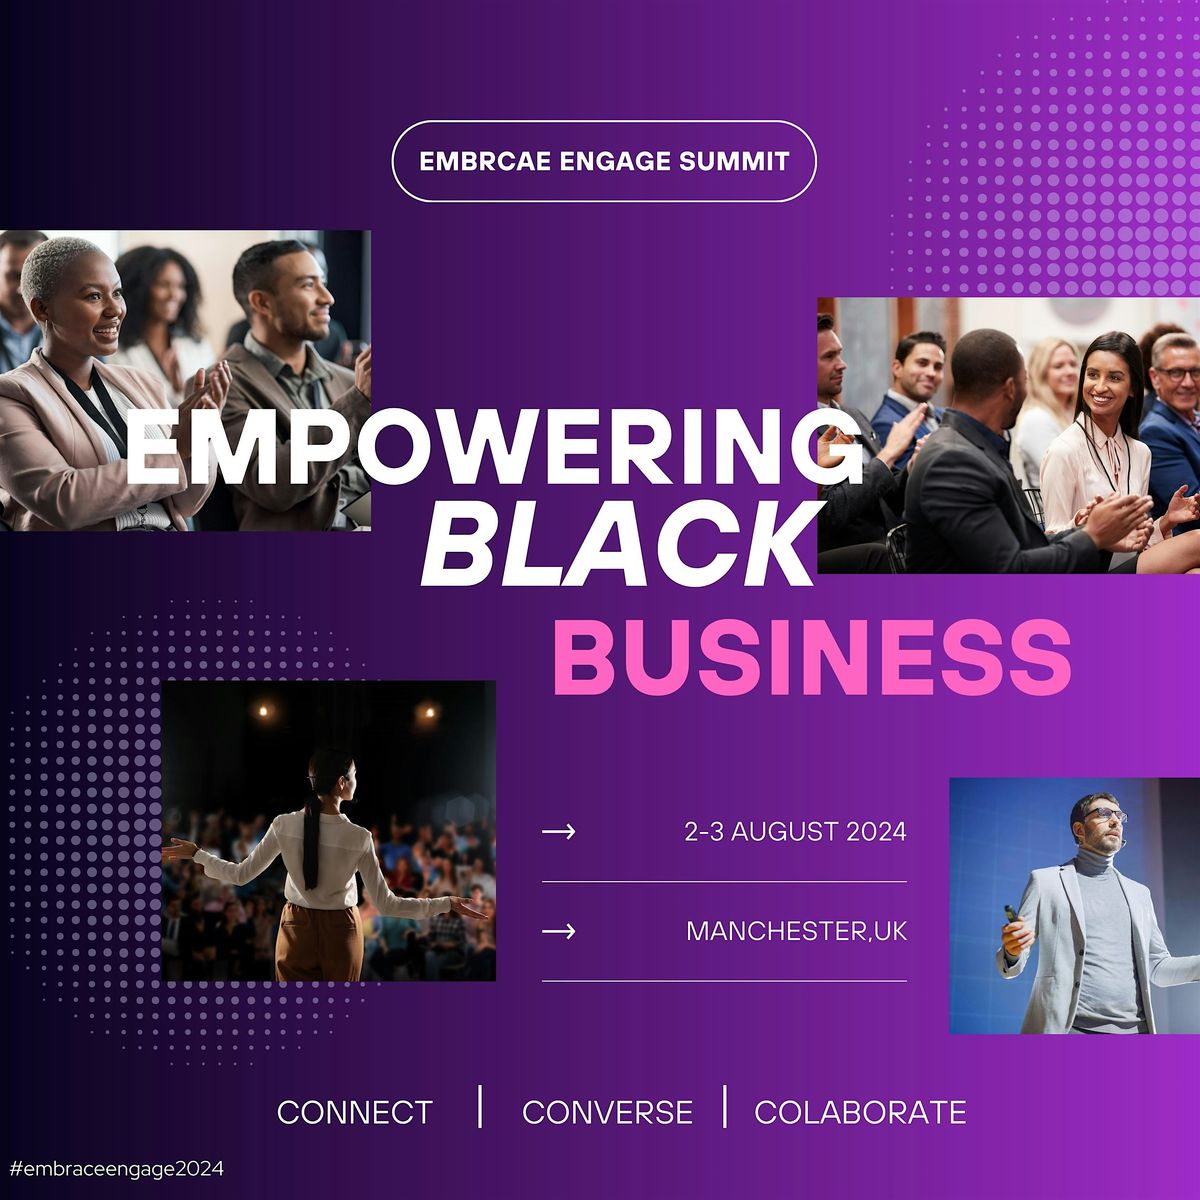 Embrace Engage Summit : Premier Black Business Summit